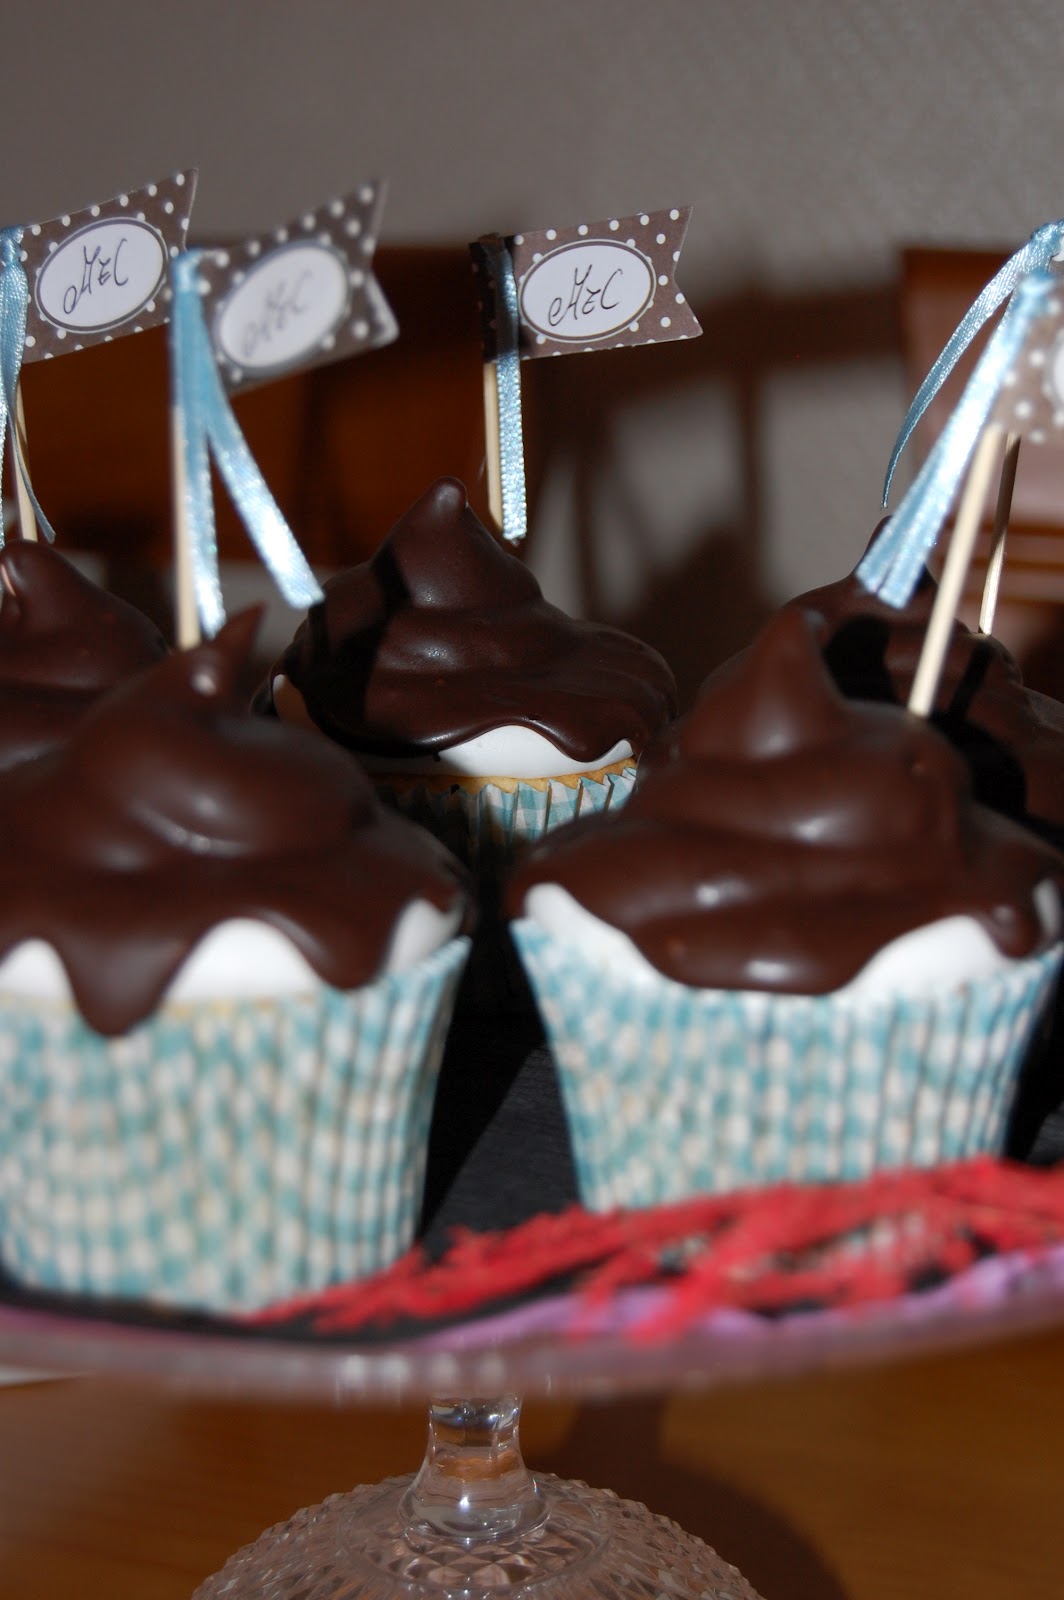 http://azucarenmicocina.blogspot.com.es/2012/09/cupcakes-de-chocolate-blanco-y-merengue.html